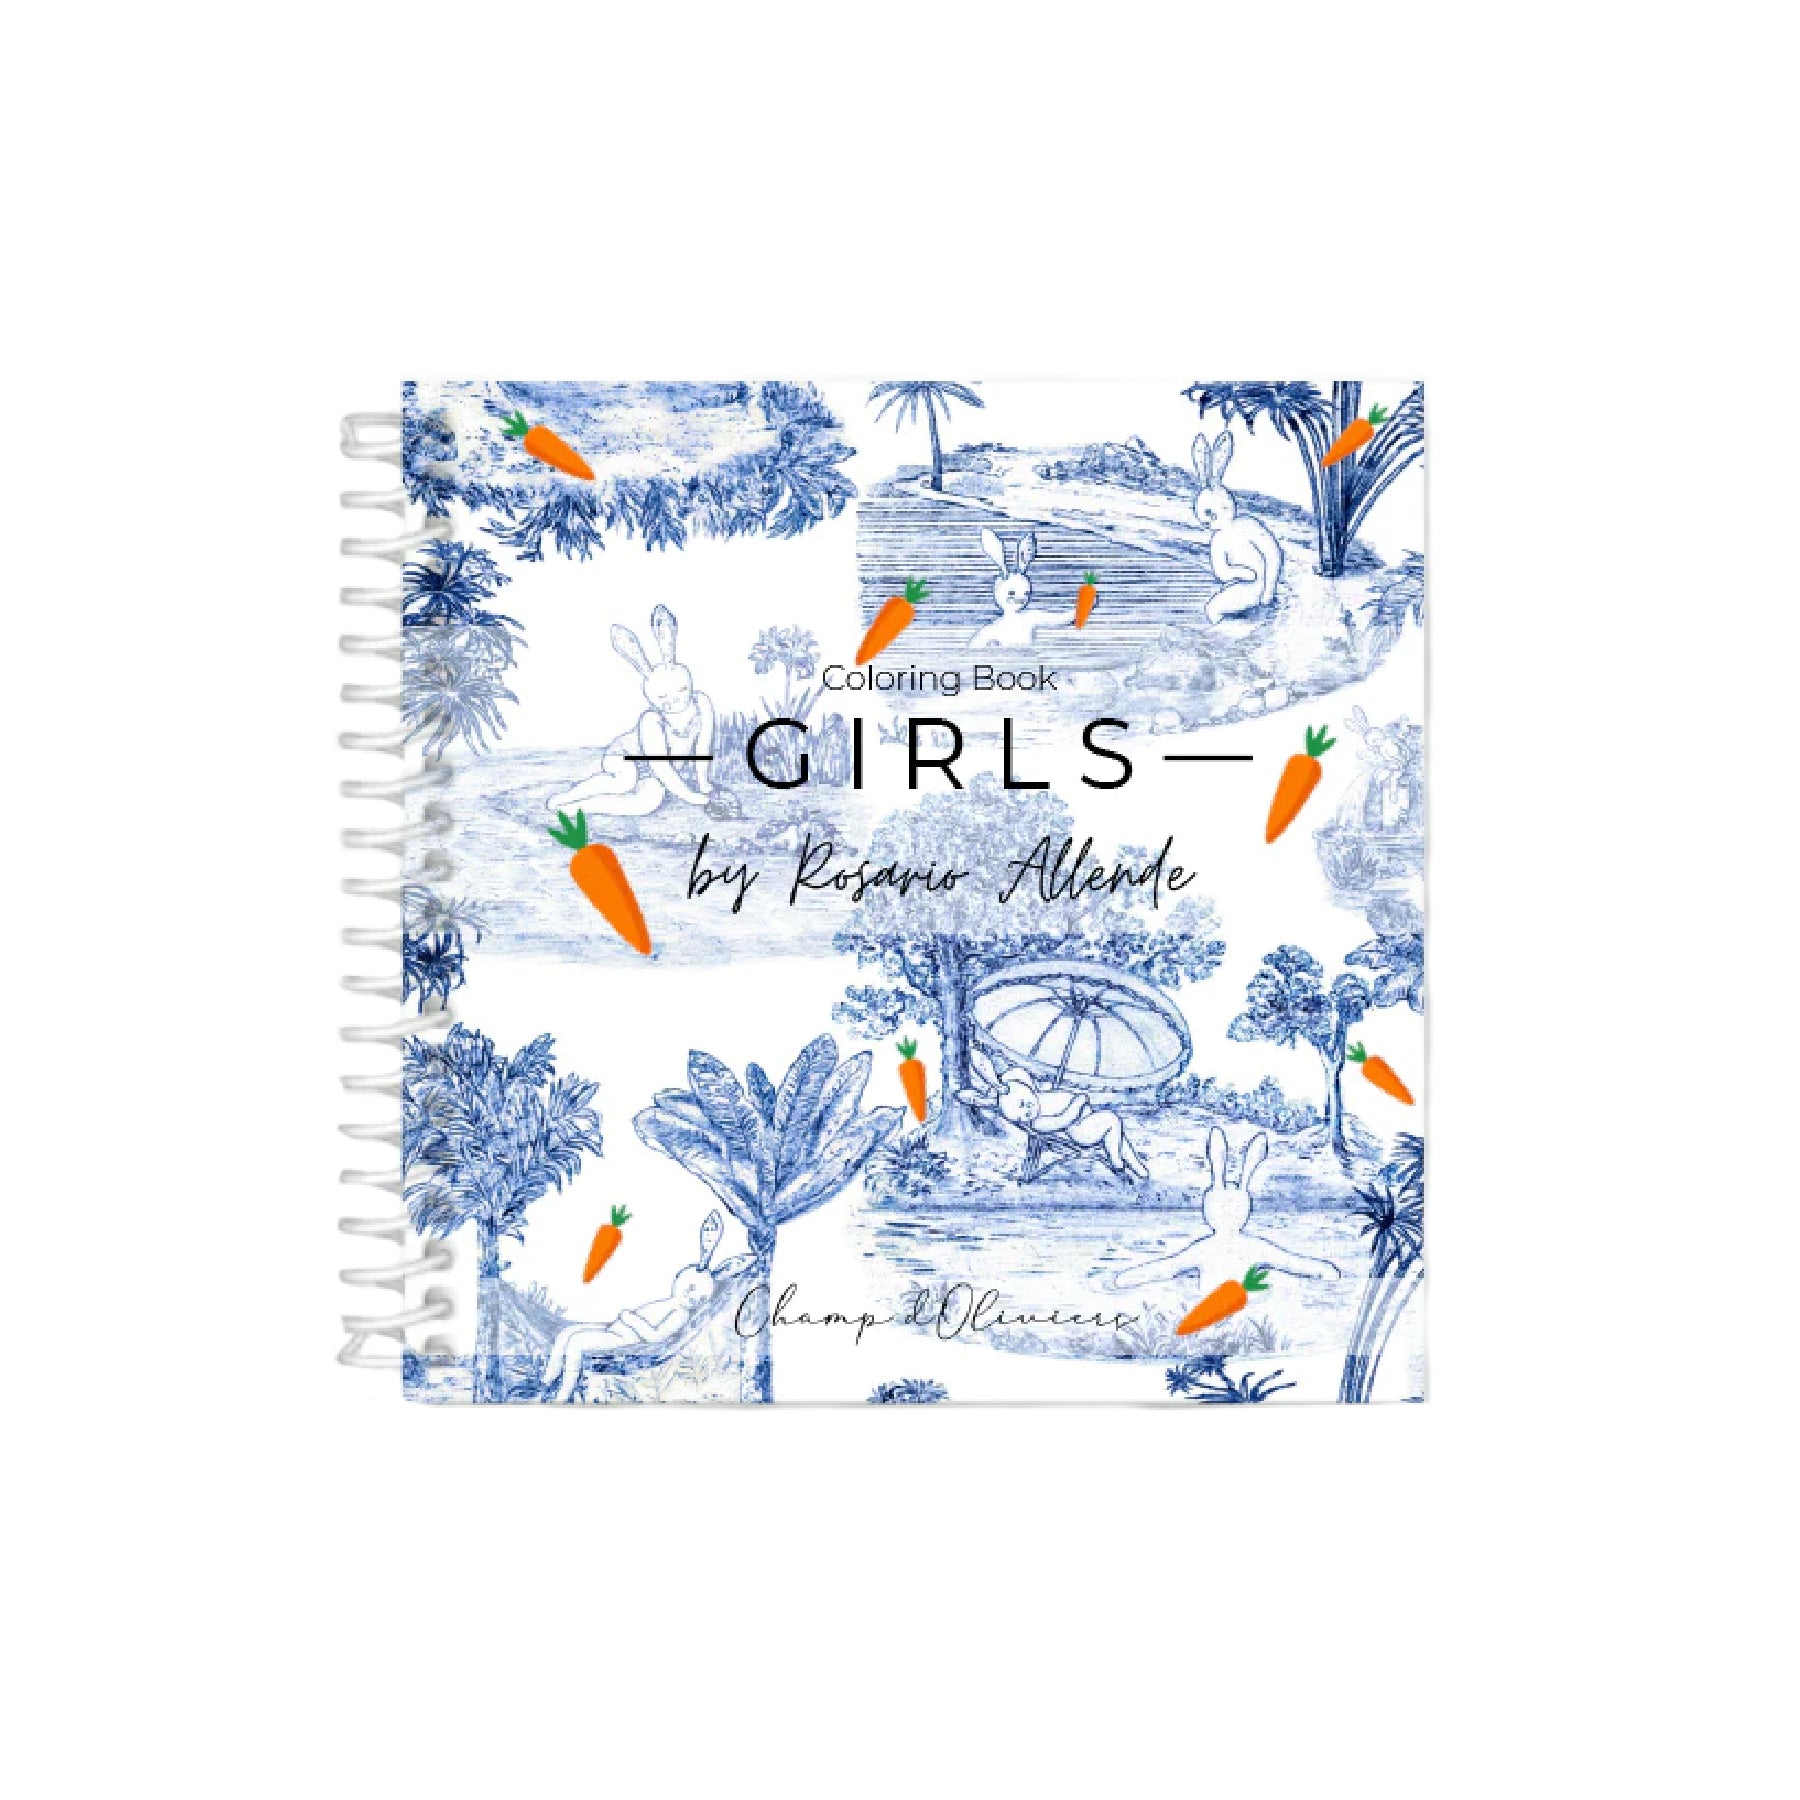 Girls - libro para pintar